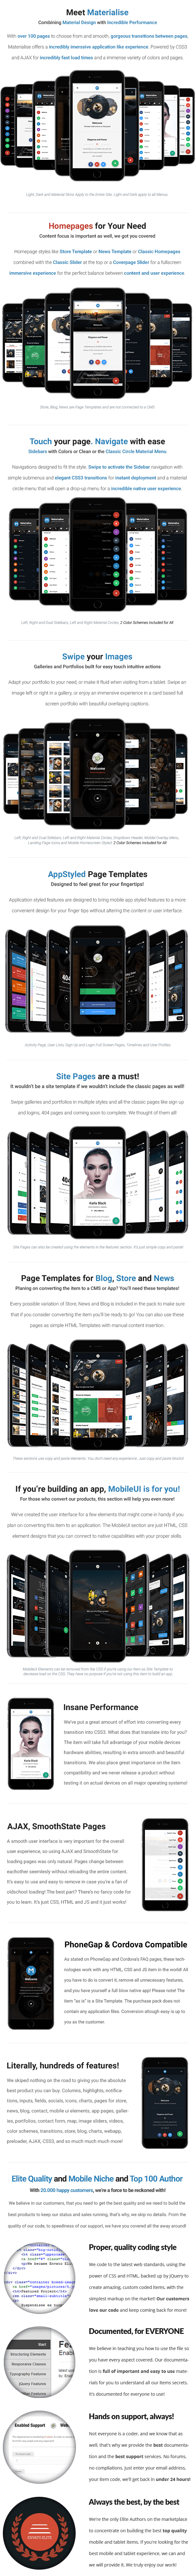 Materialise | PhoneGap & Cordova Mobile App - 10